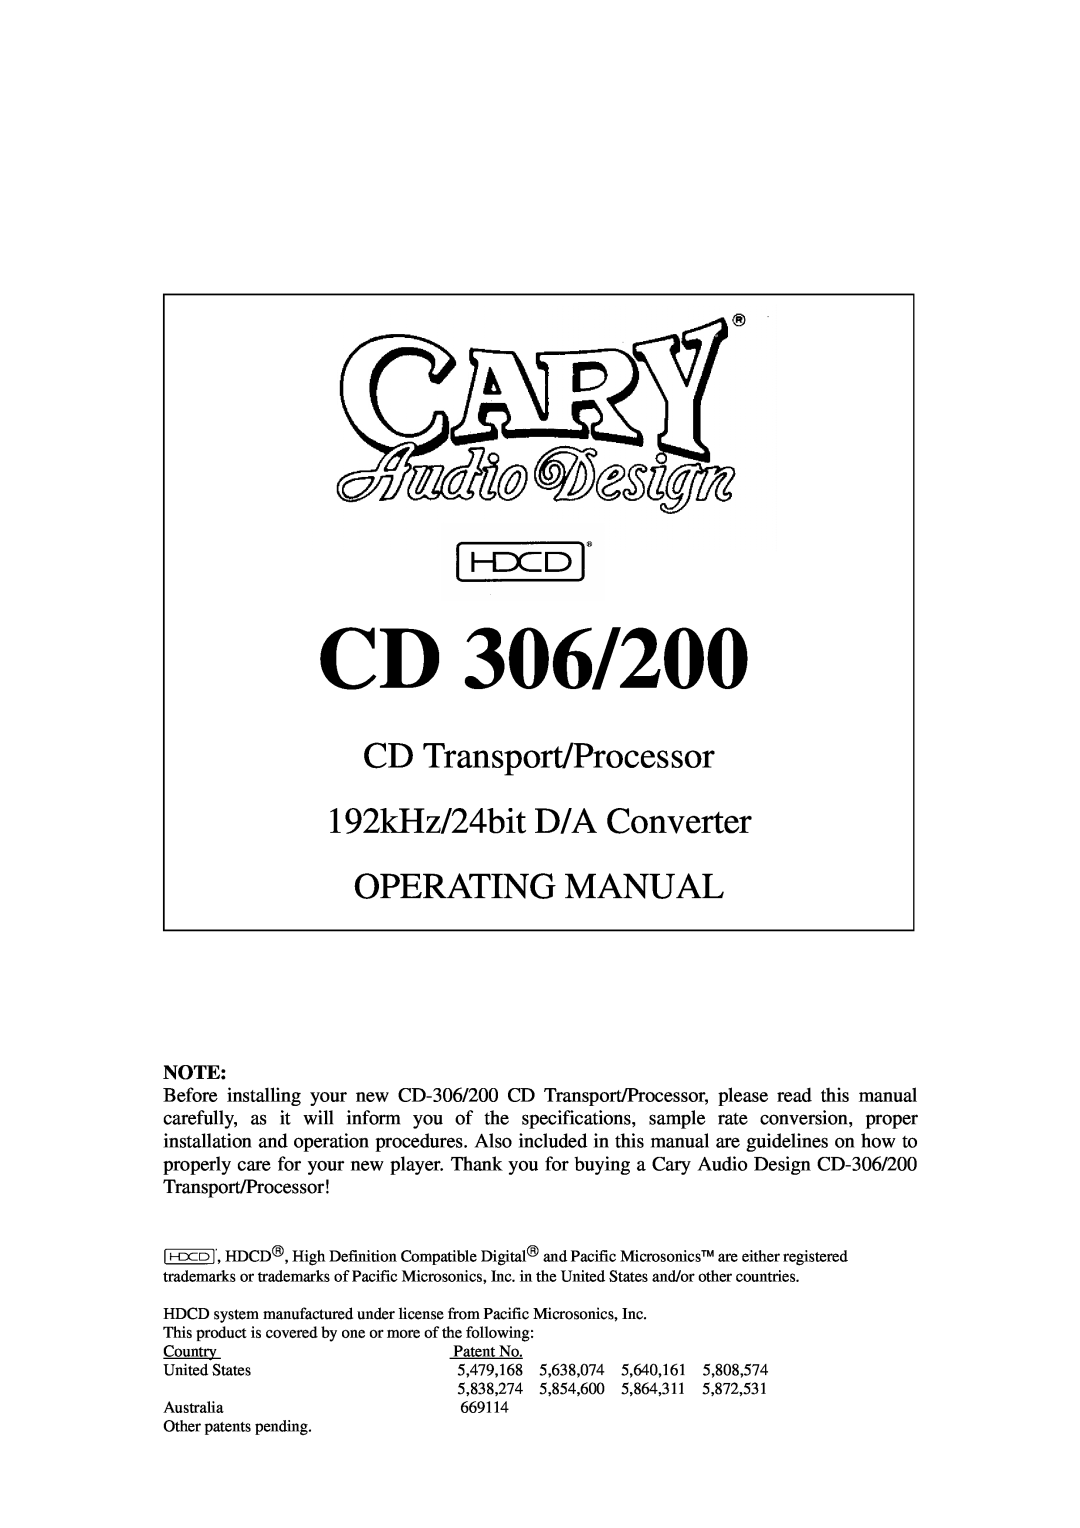 Cary Audio Design specifications CD 306/200, CD Transport/Processor 192kHz/24bit D/A Converter, Operating Manual 